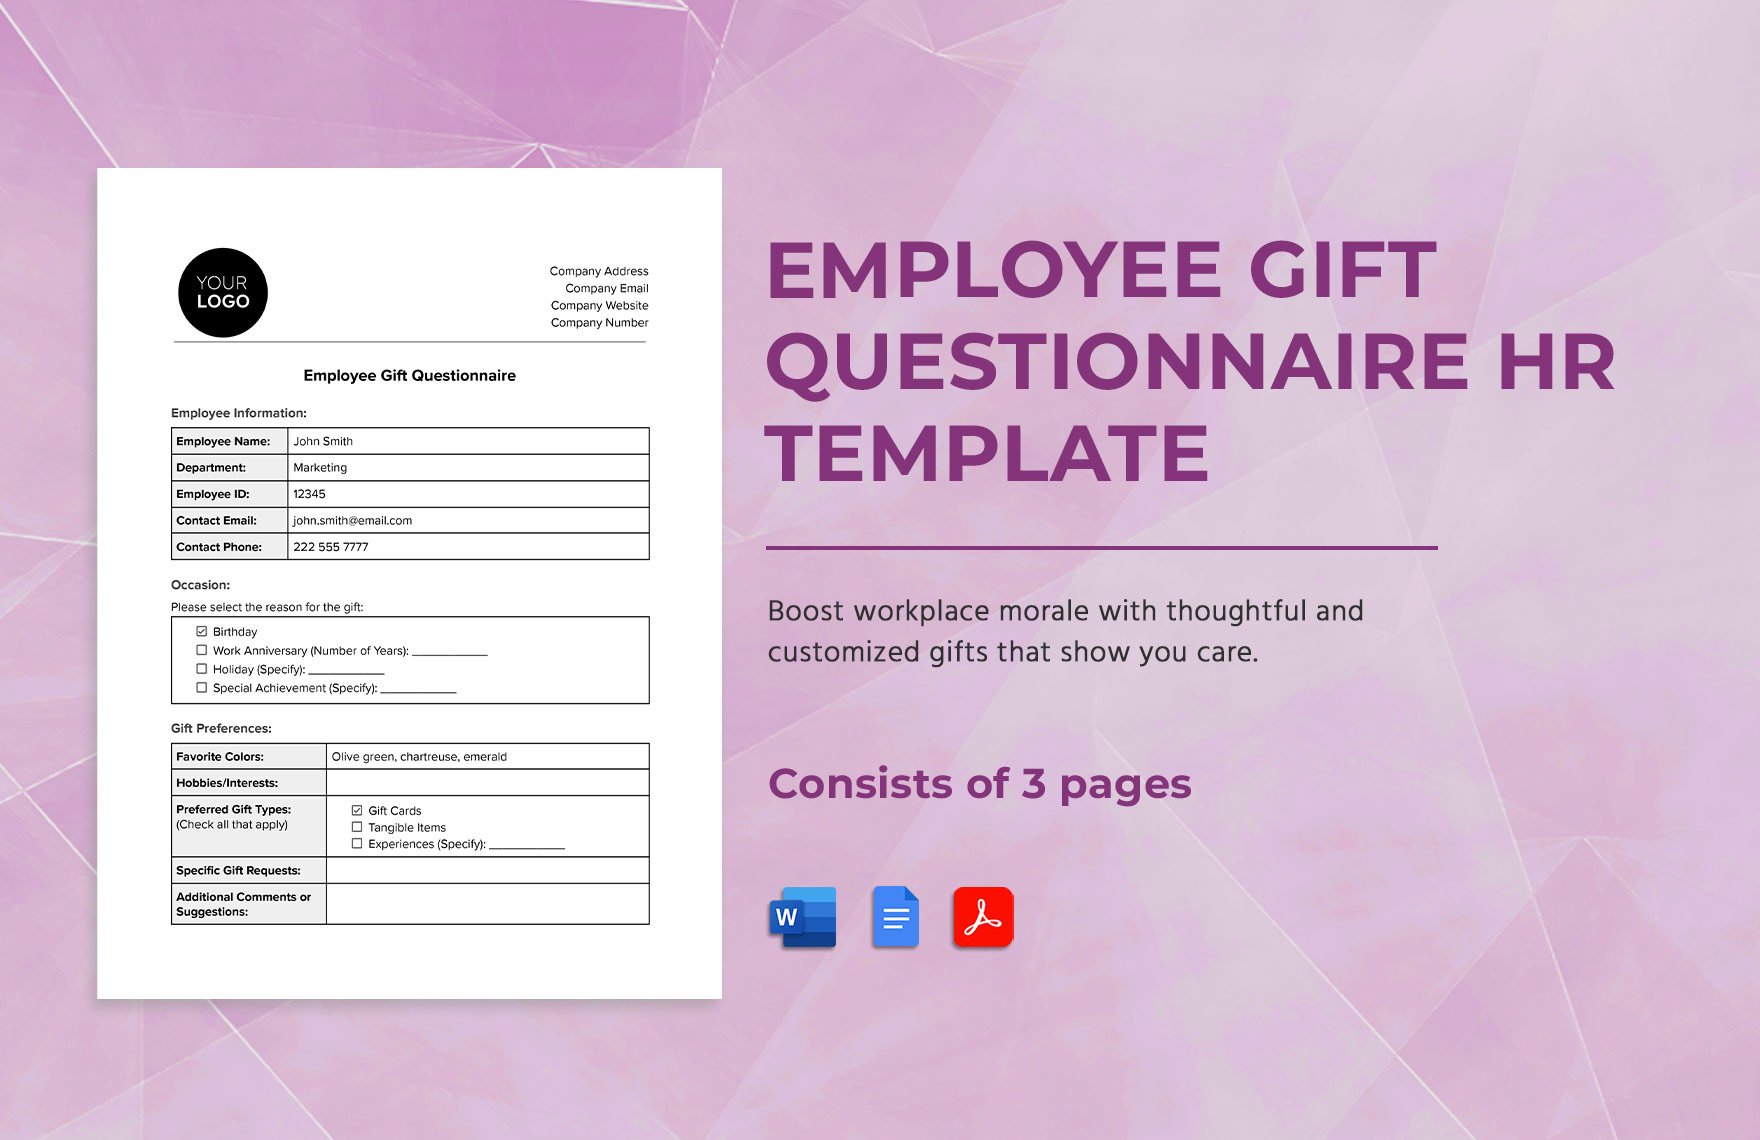 Employee Gift Questionnaire HR Template